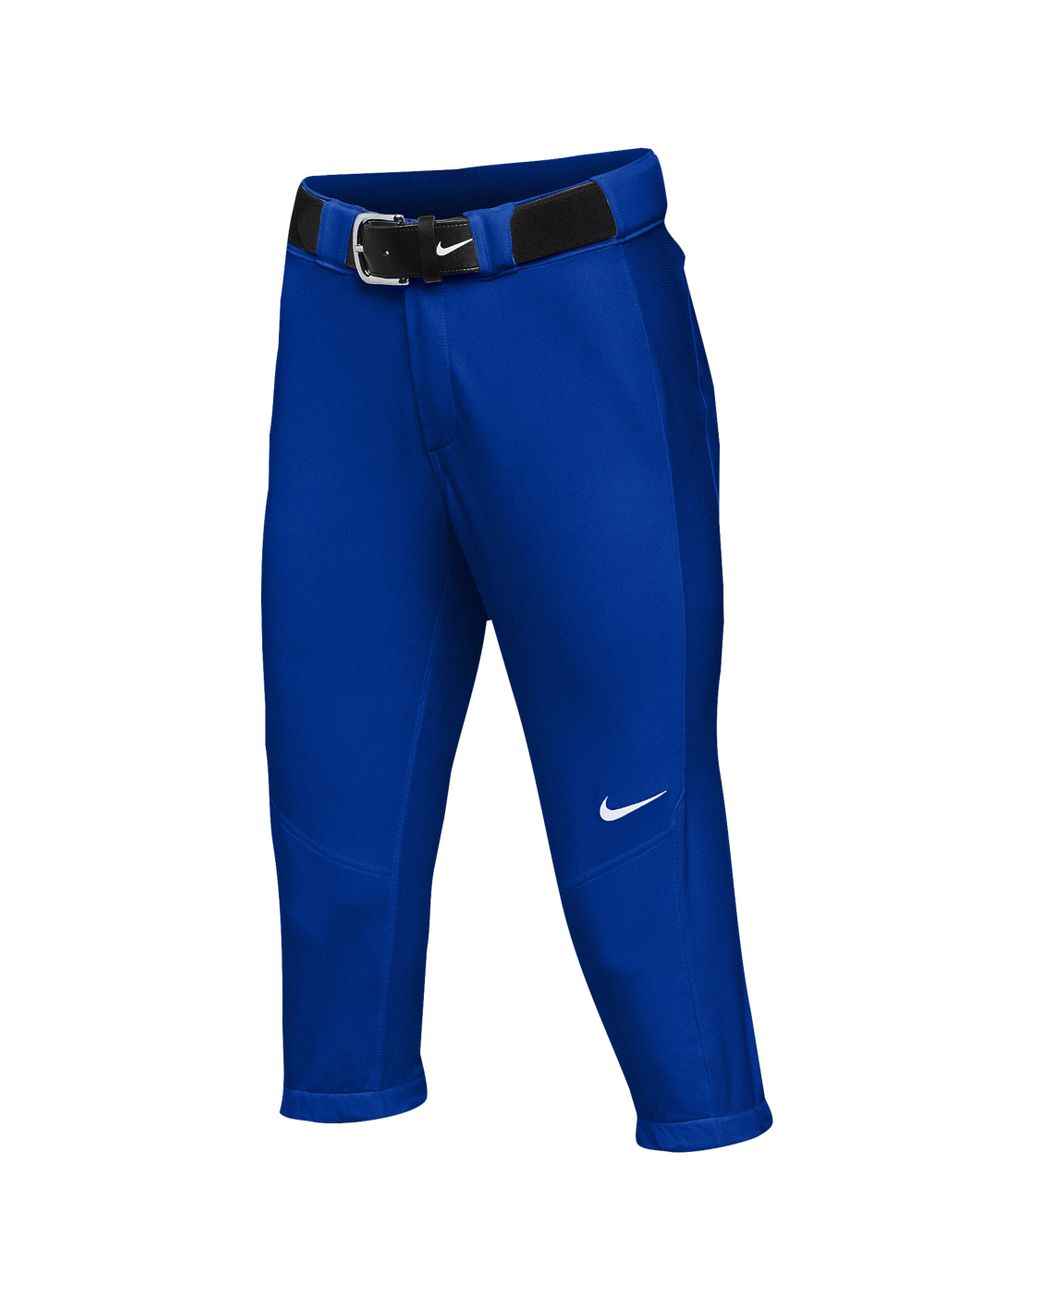 Nike Synthetic Team Vapor Pro 3/4 Pants in Blue - Lyst